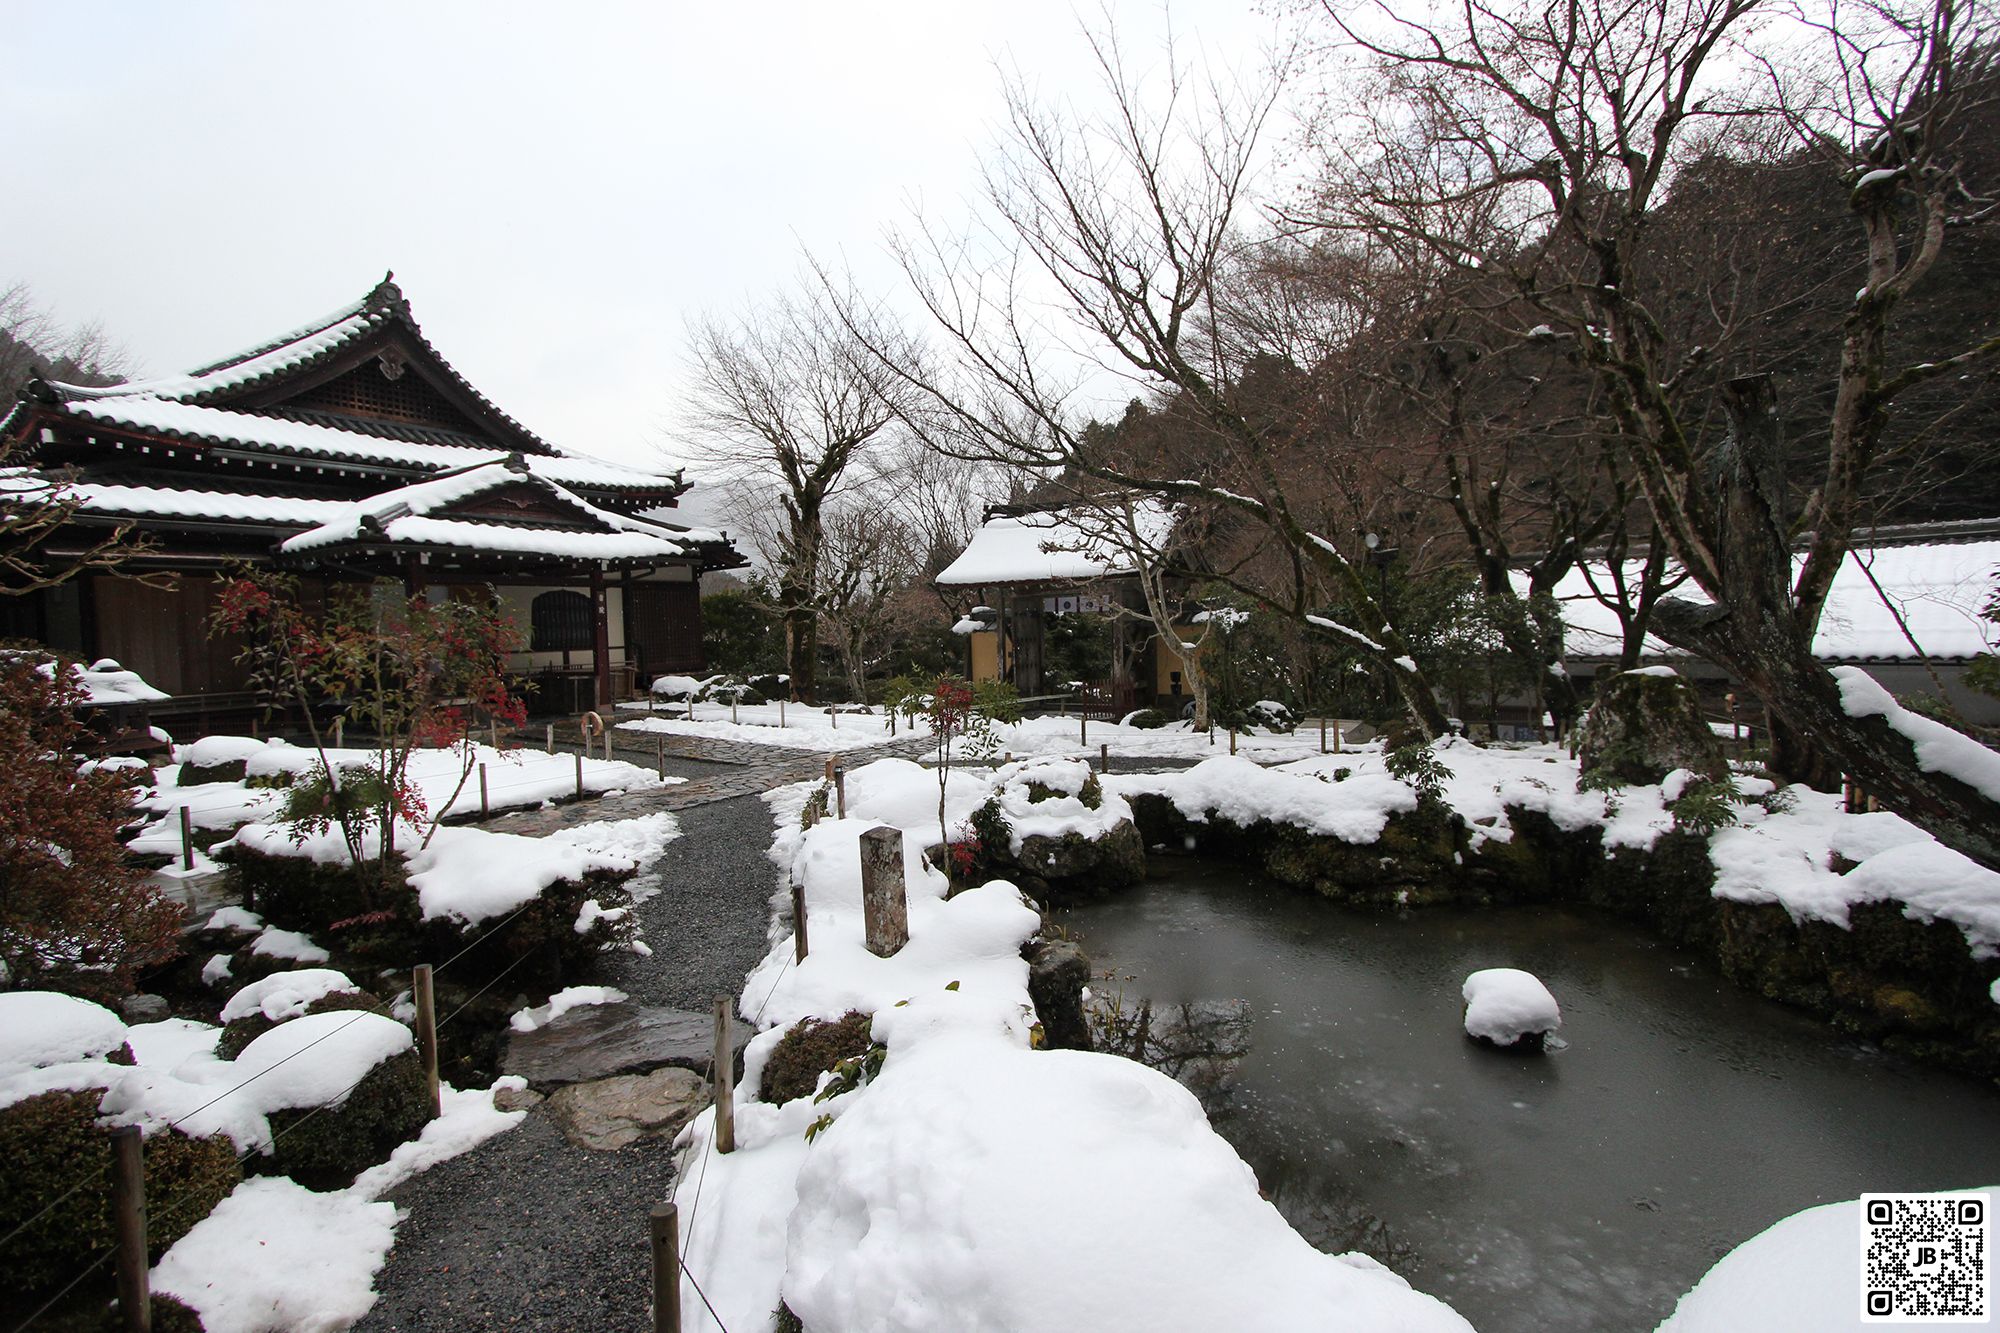 japon kyoto temple jakko-in fevrier 2014 haute resolution